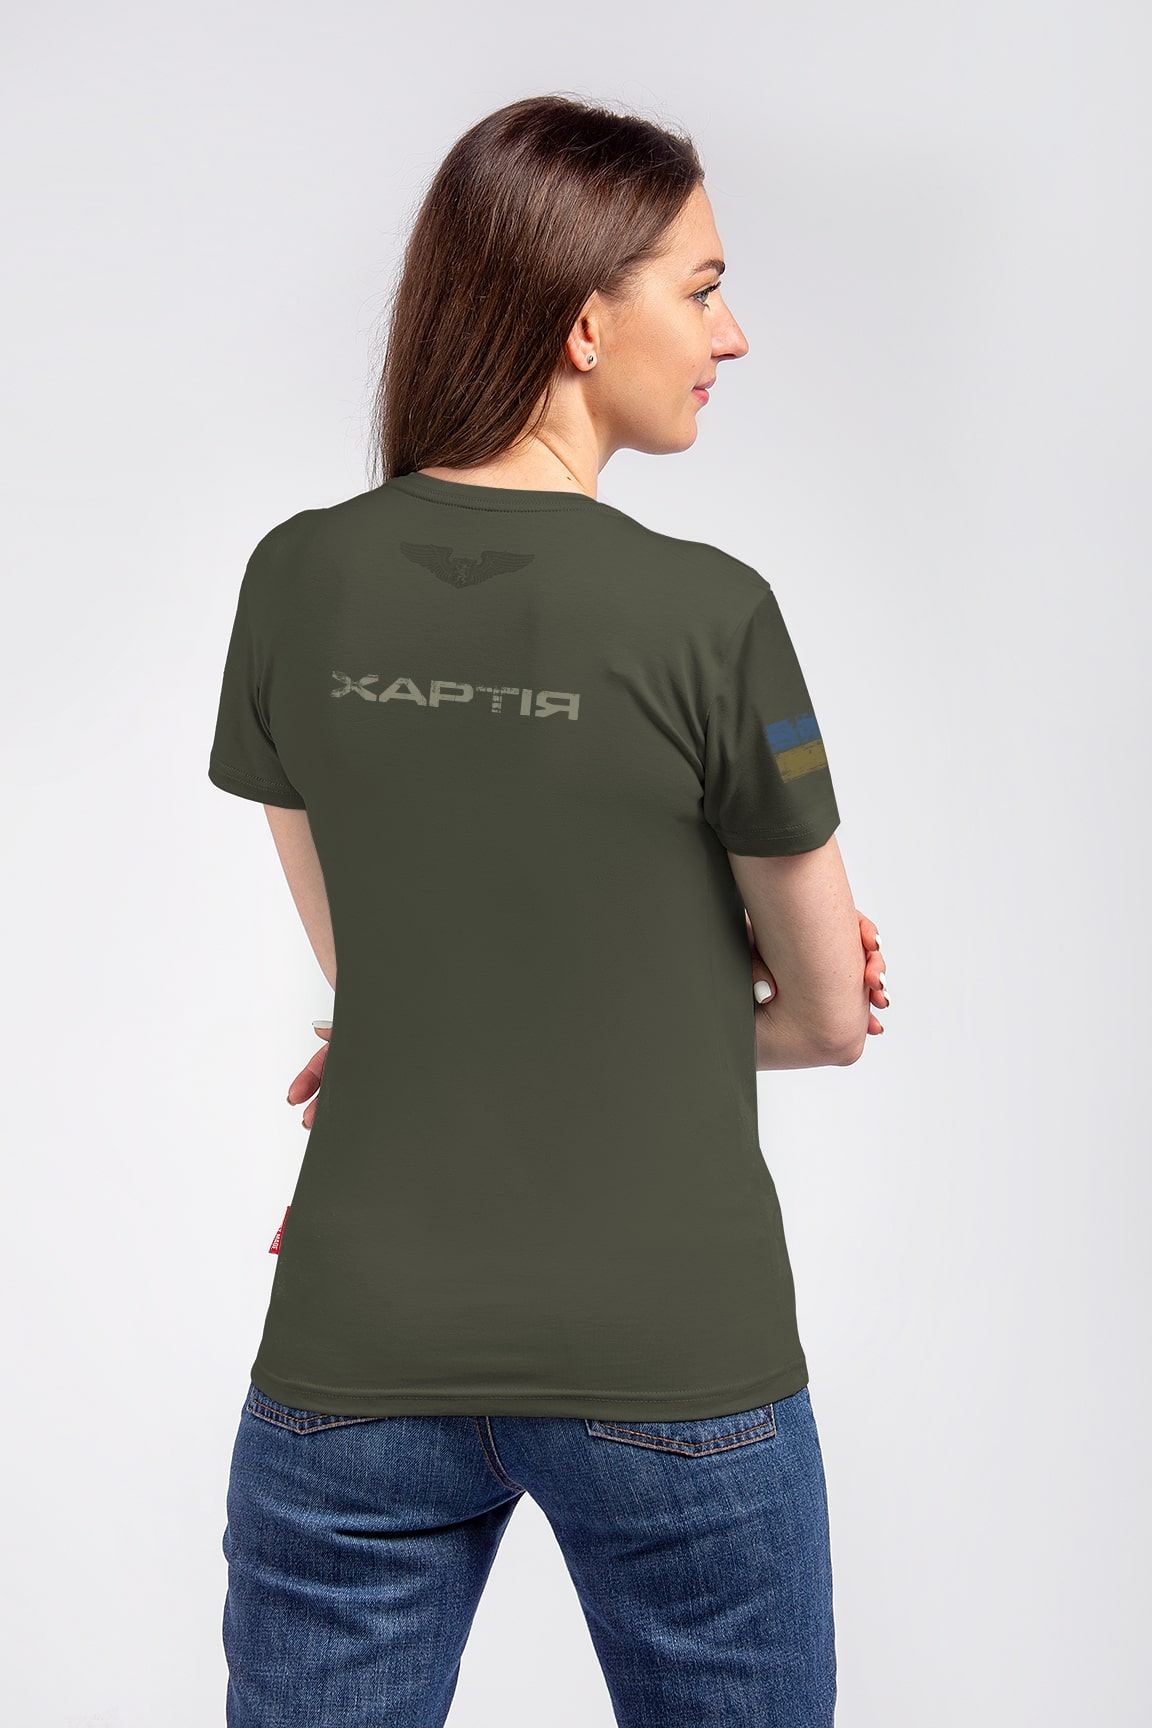 Women's T-Shirt Khartiia. Color khaki. 1.